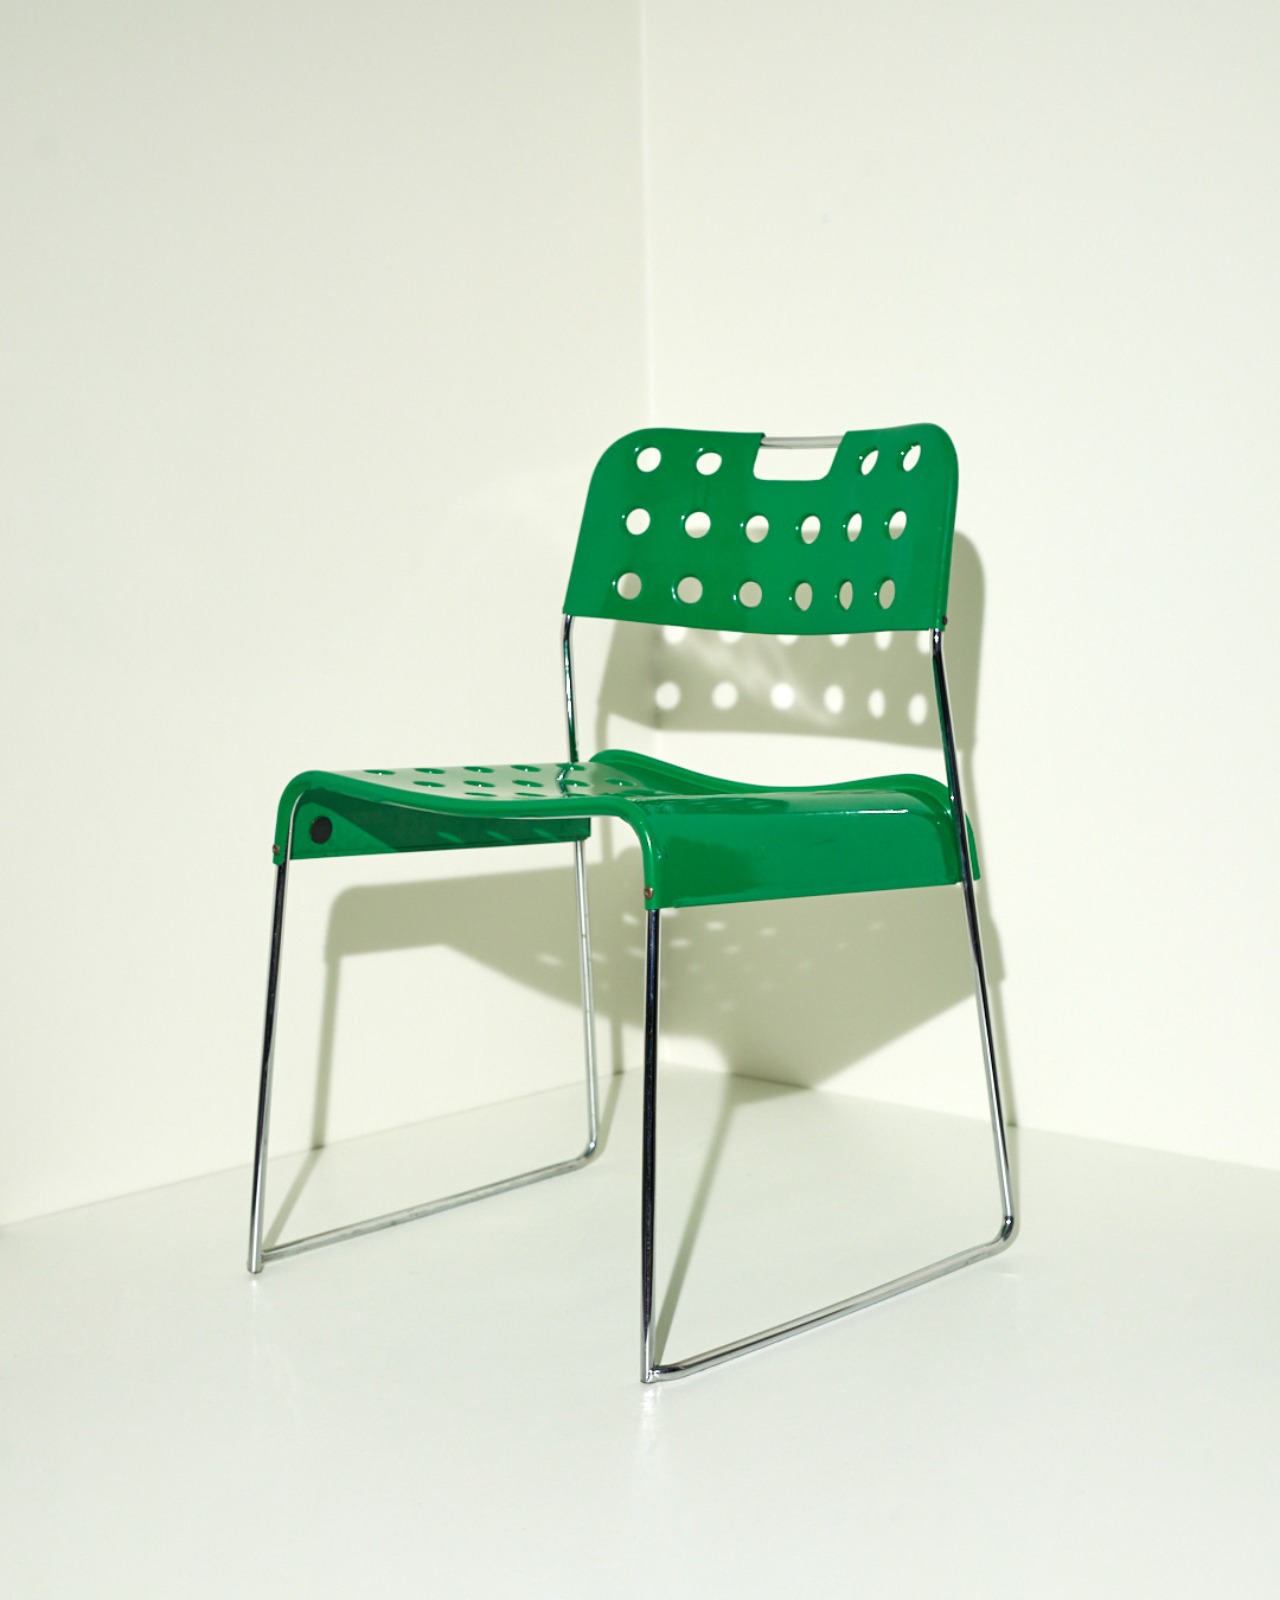 Modern Metal Chairs Omstak by Rodney Kinsman for Bieffeplast 70s (green)